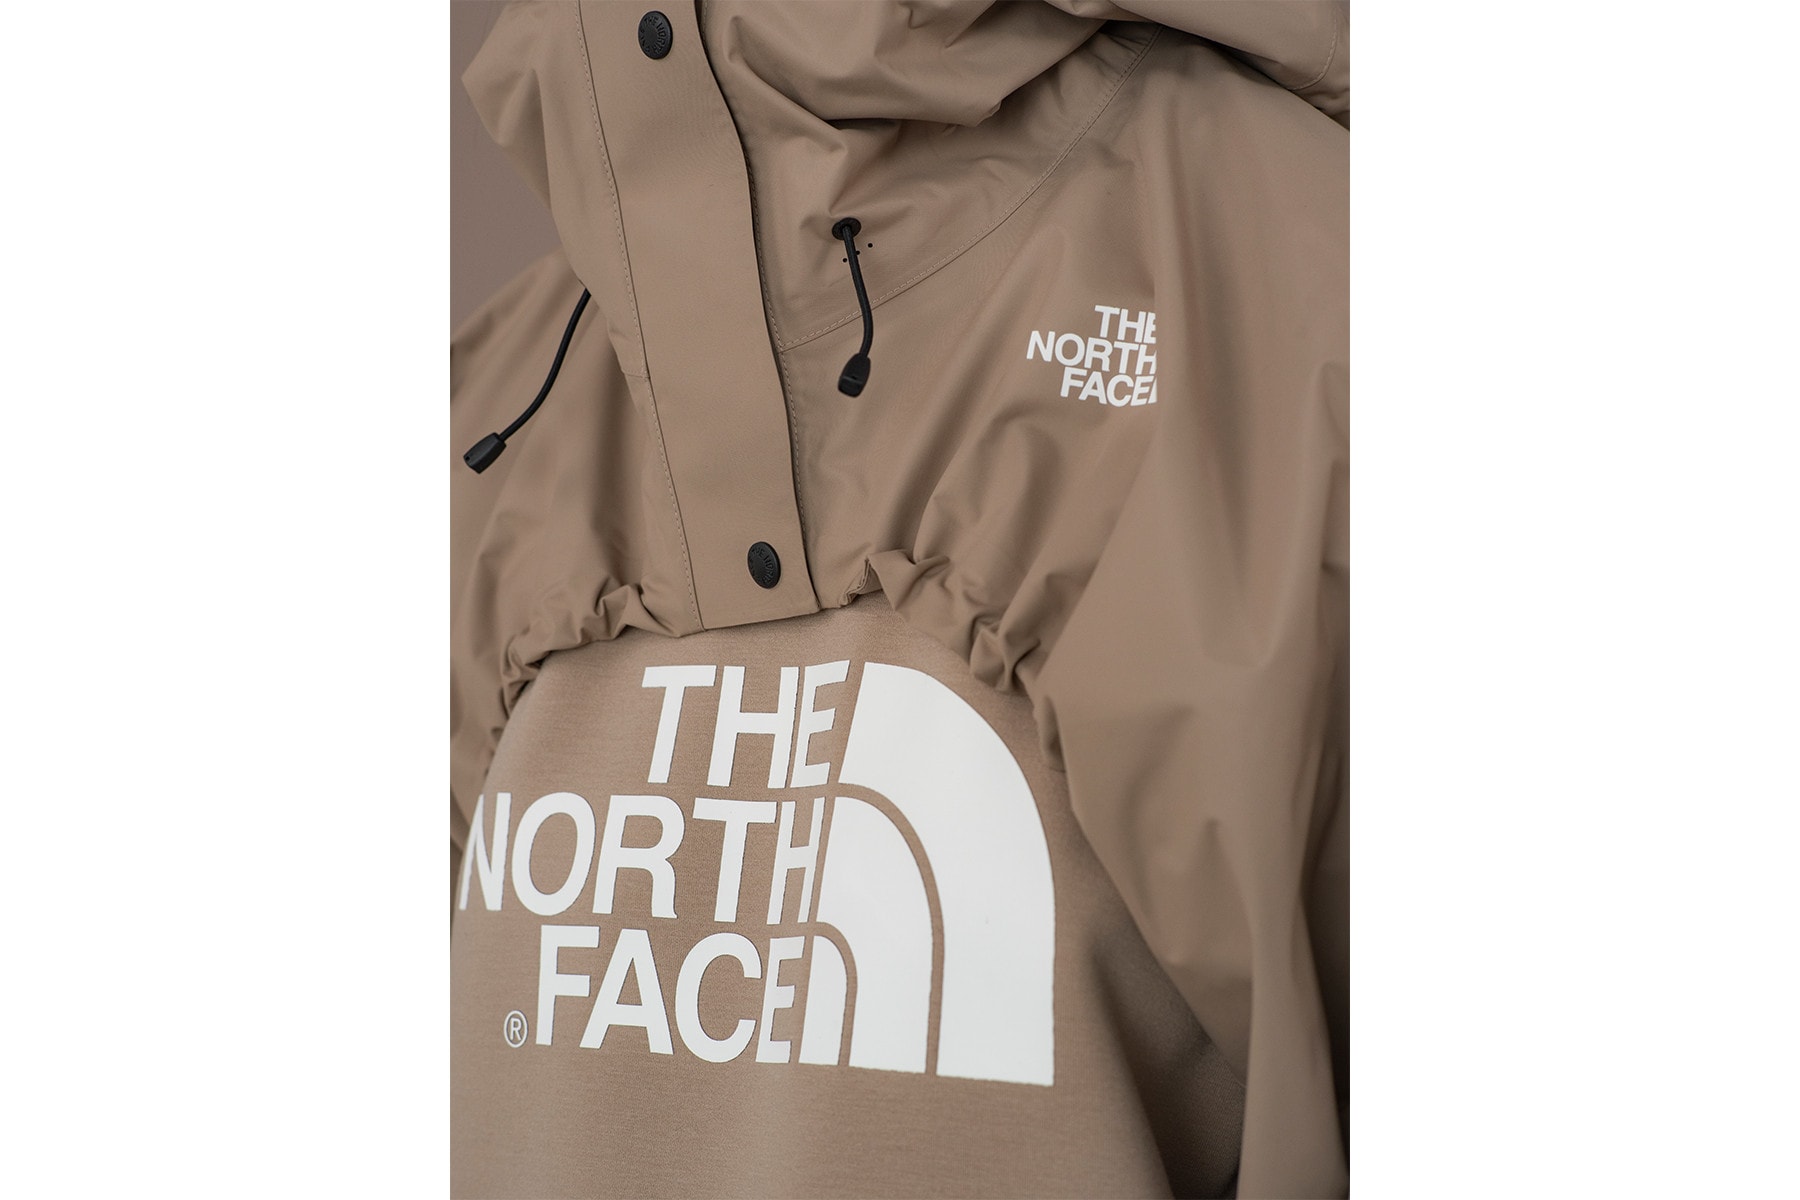 The North Face x HYKE 2019 春夏联名系列 Lookbook